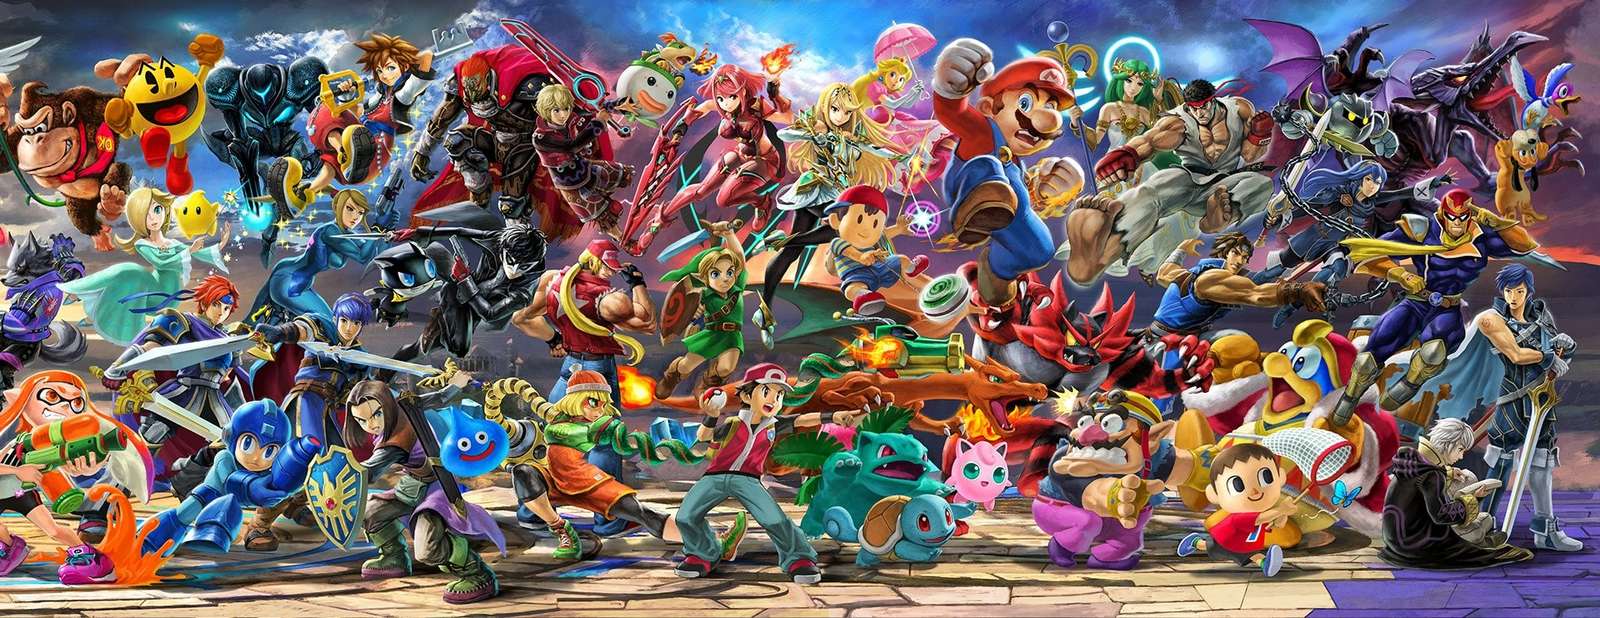 Pictura murală Super Smash Bros Ultimate, dreapta jigsaw puzzle online